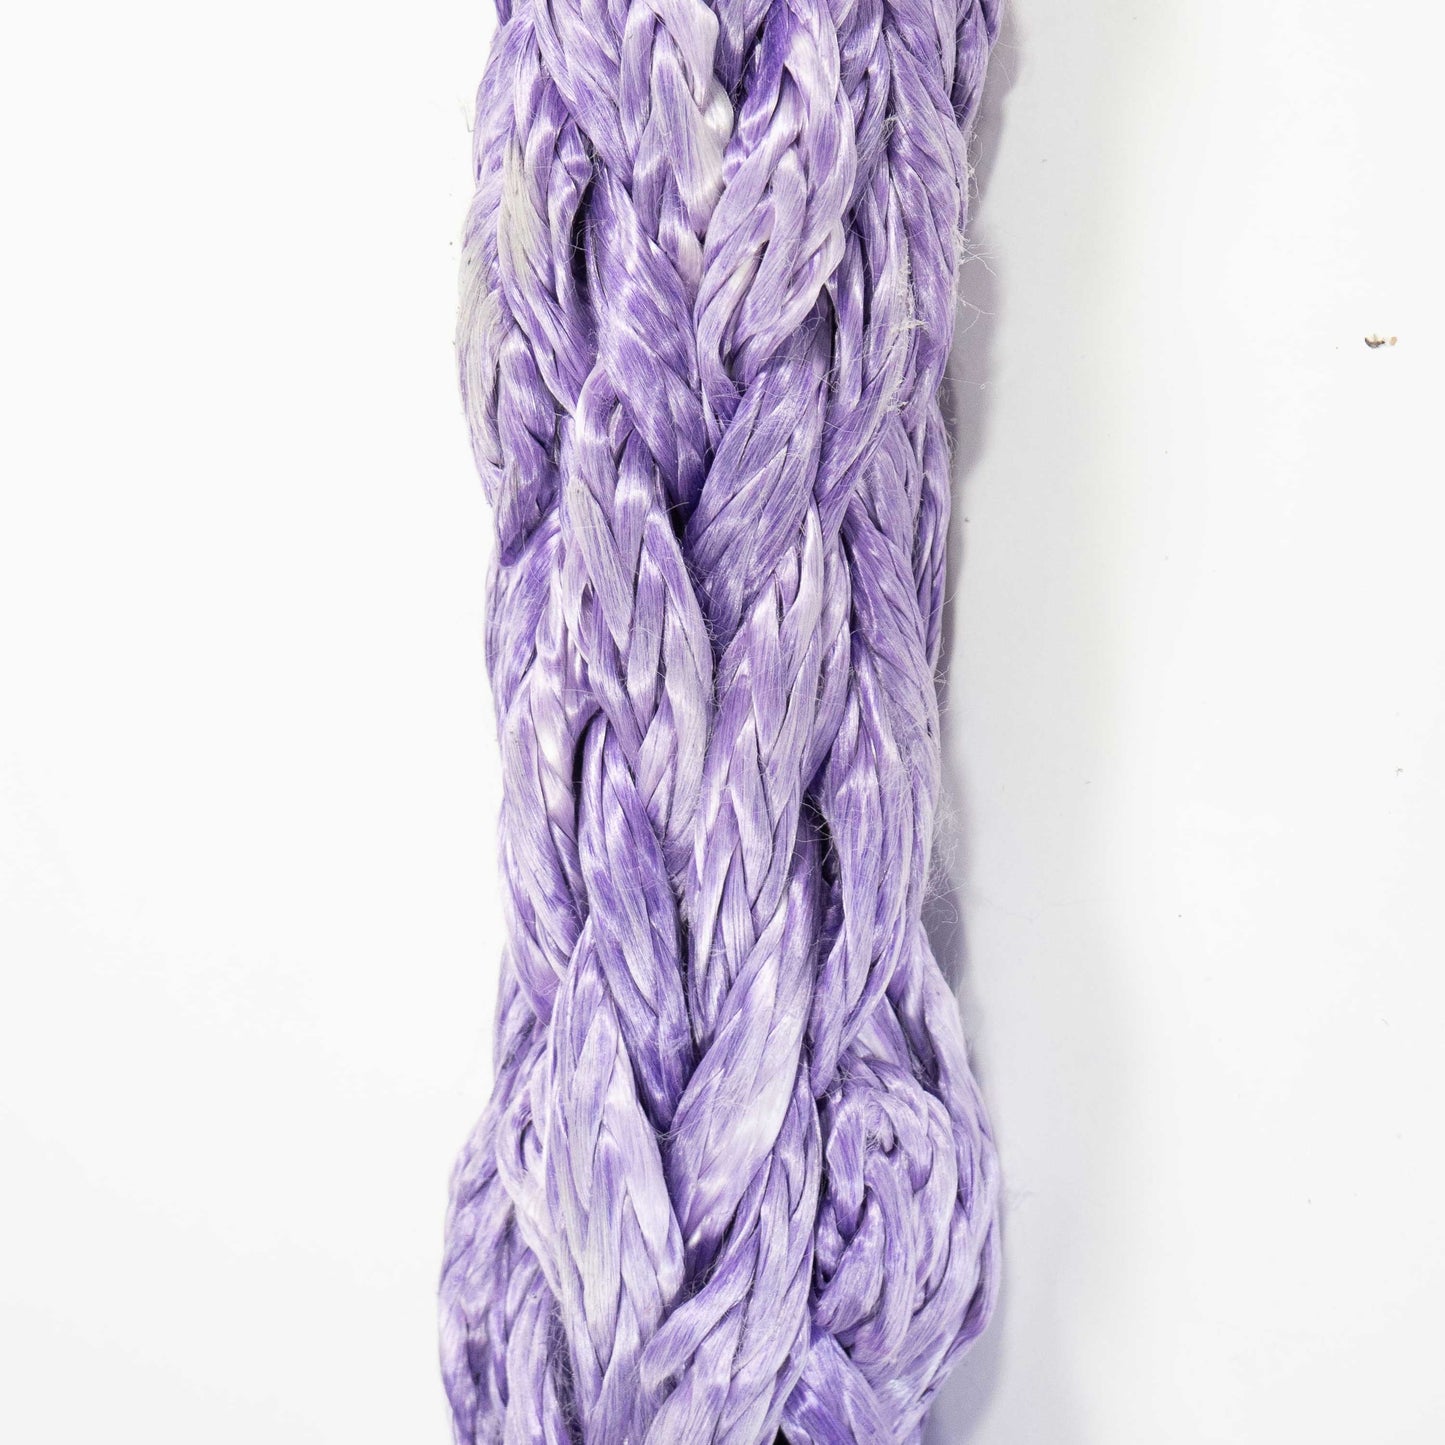 Purple plasma 12x12 strand rope